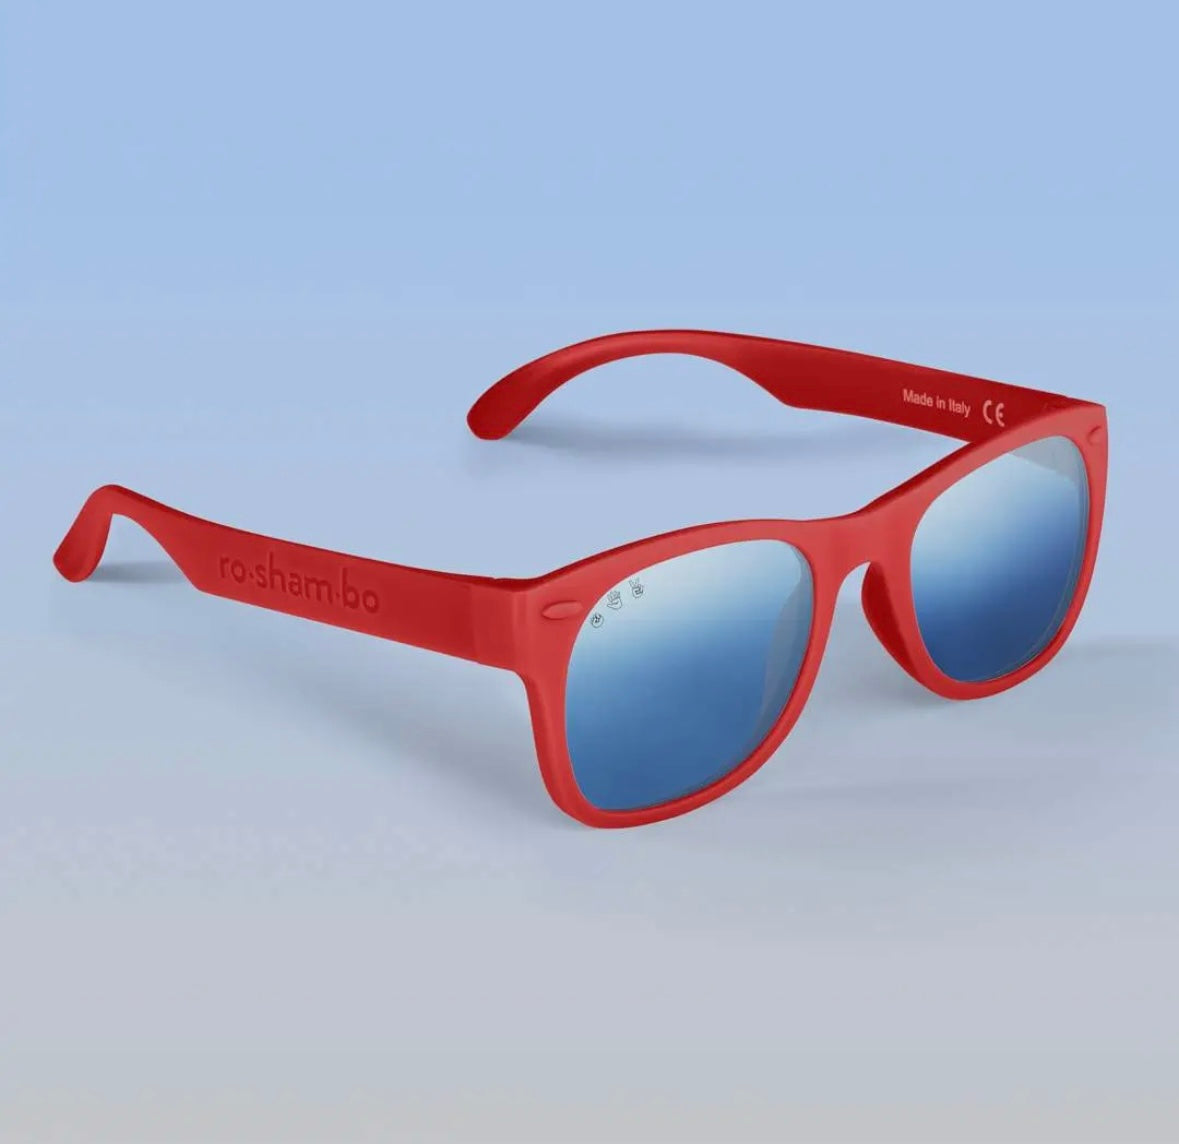 Roshambo Baby Sunglasses - Red McFly, Grey Lens